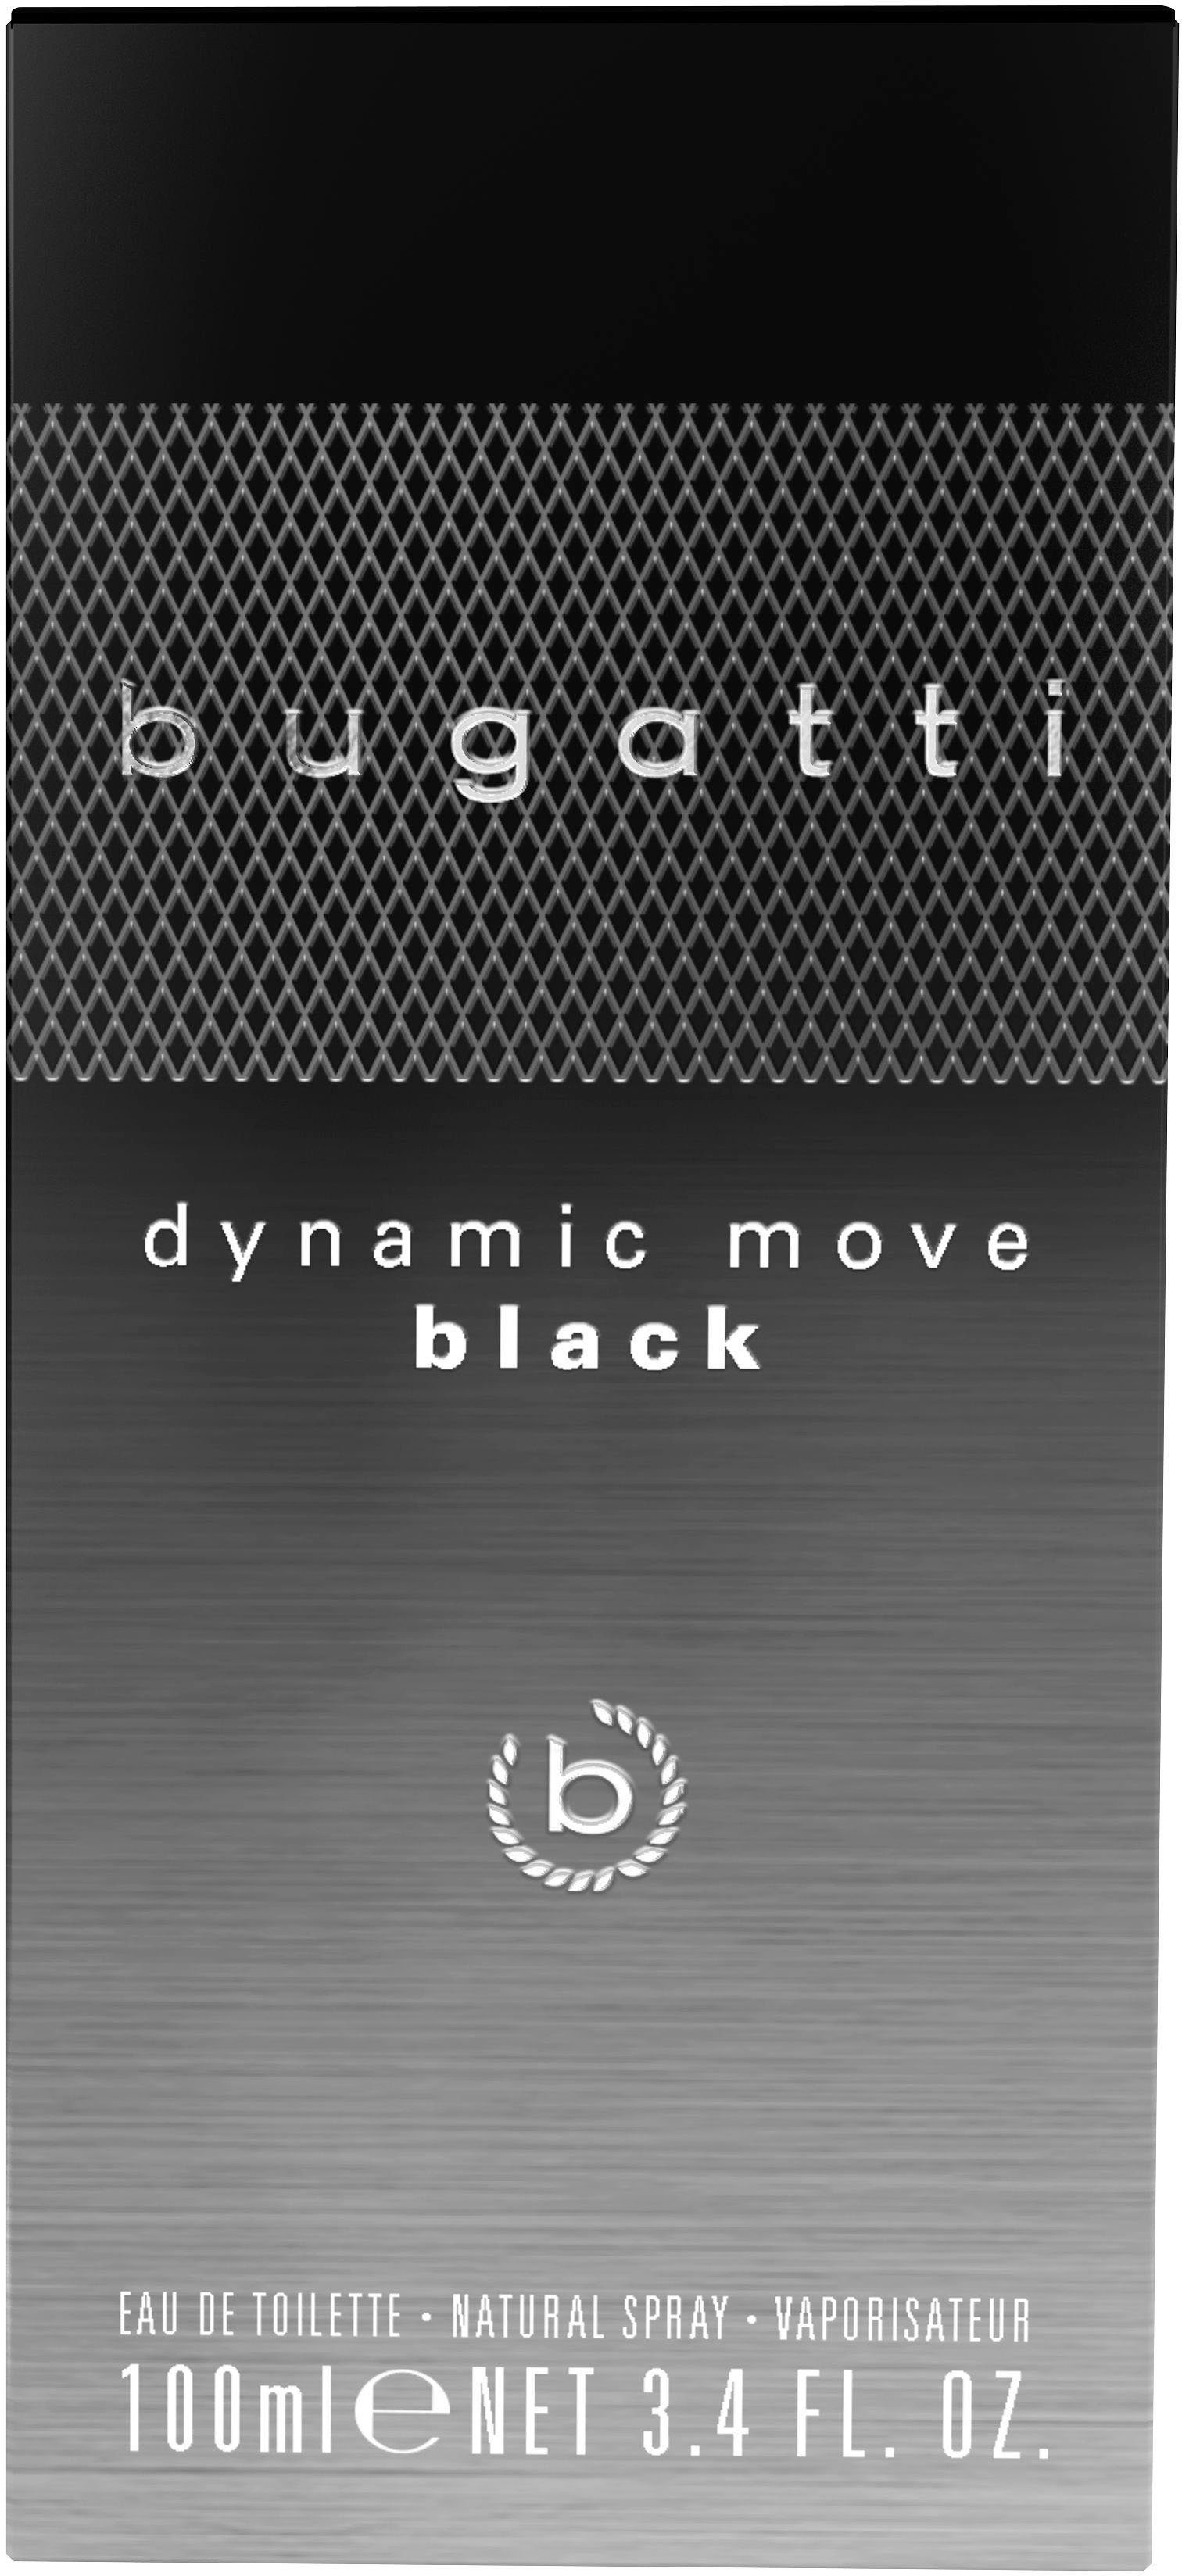 100ml EdT Move Dynamic Black Eau bugatti Toilette de